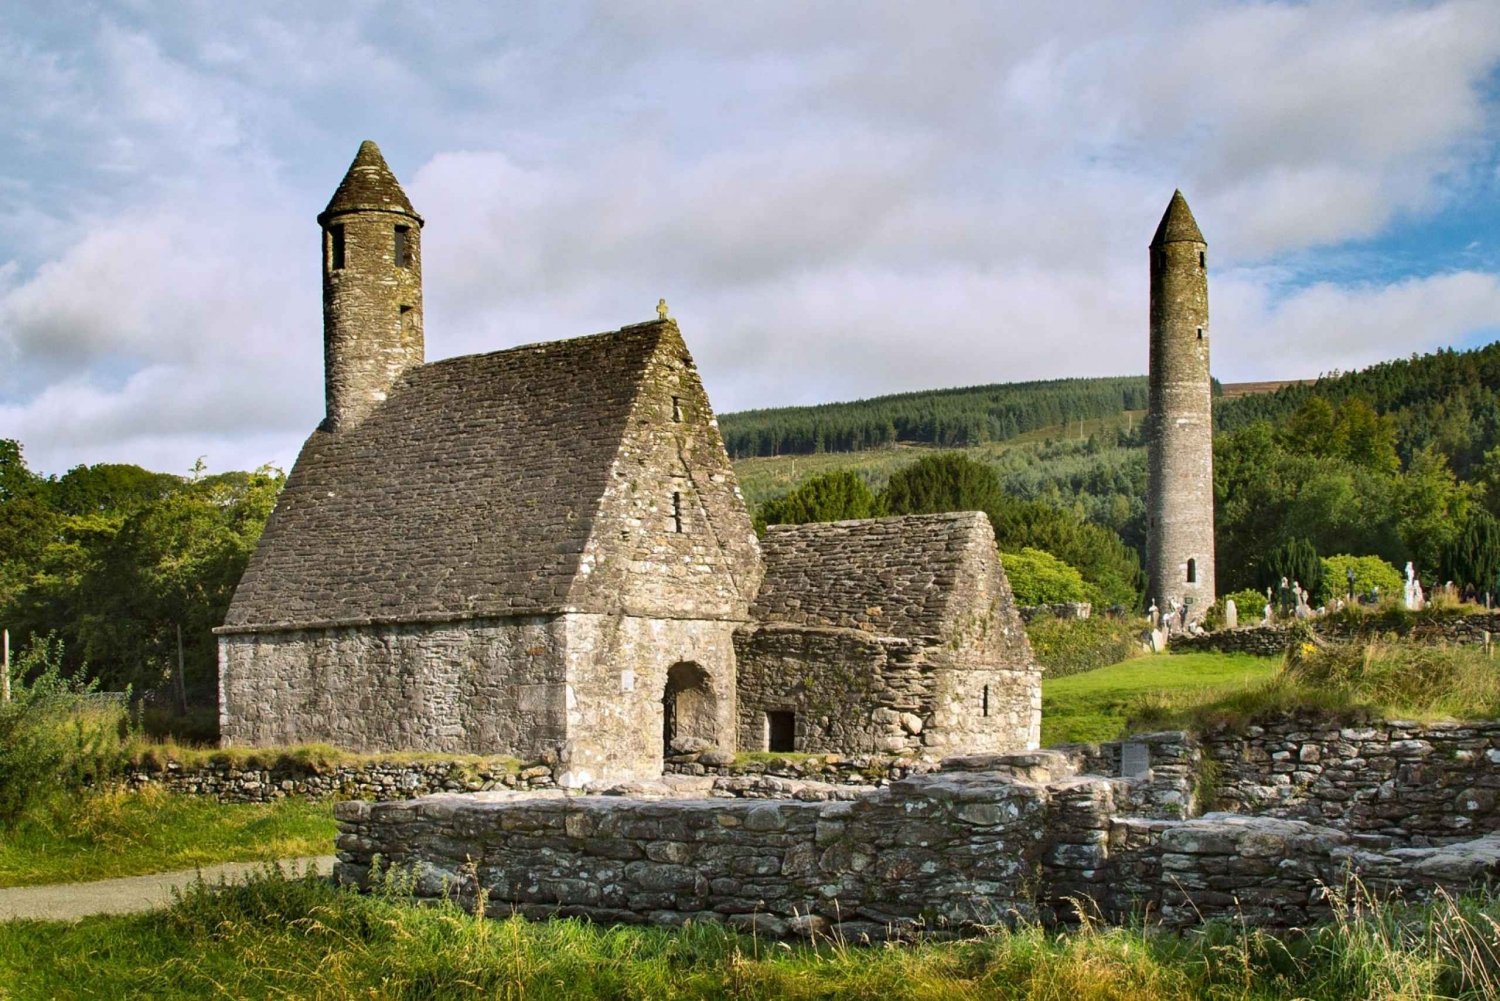 Explore the Wicklow Mountains, Glendalough, and Kilkenny